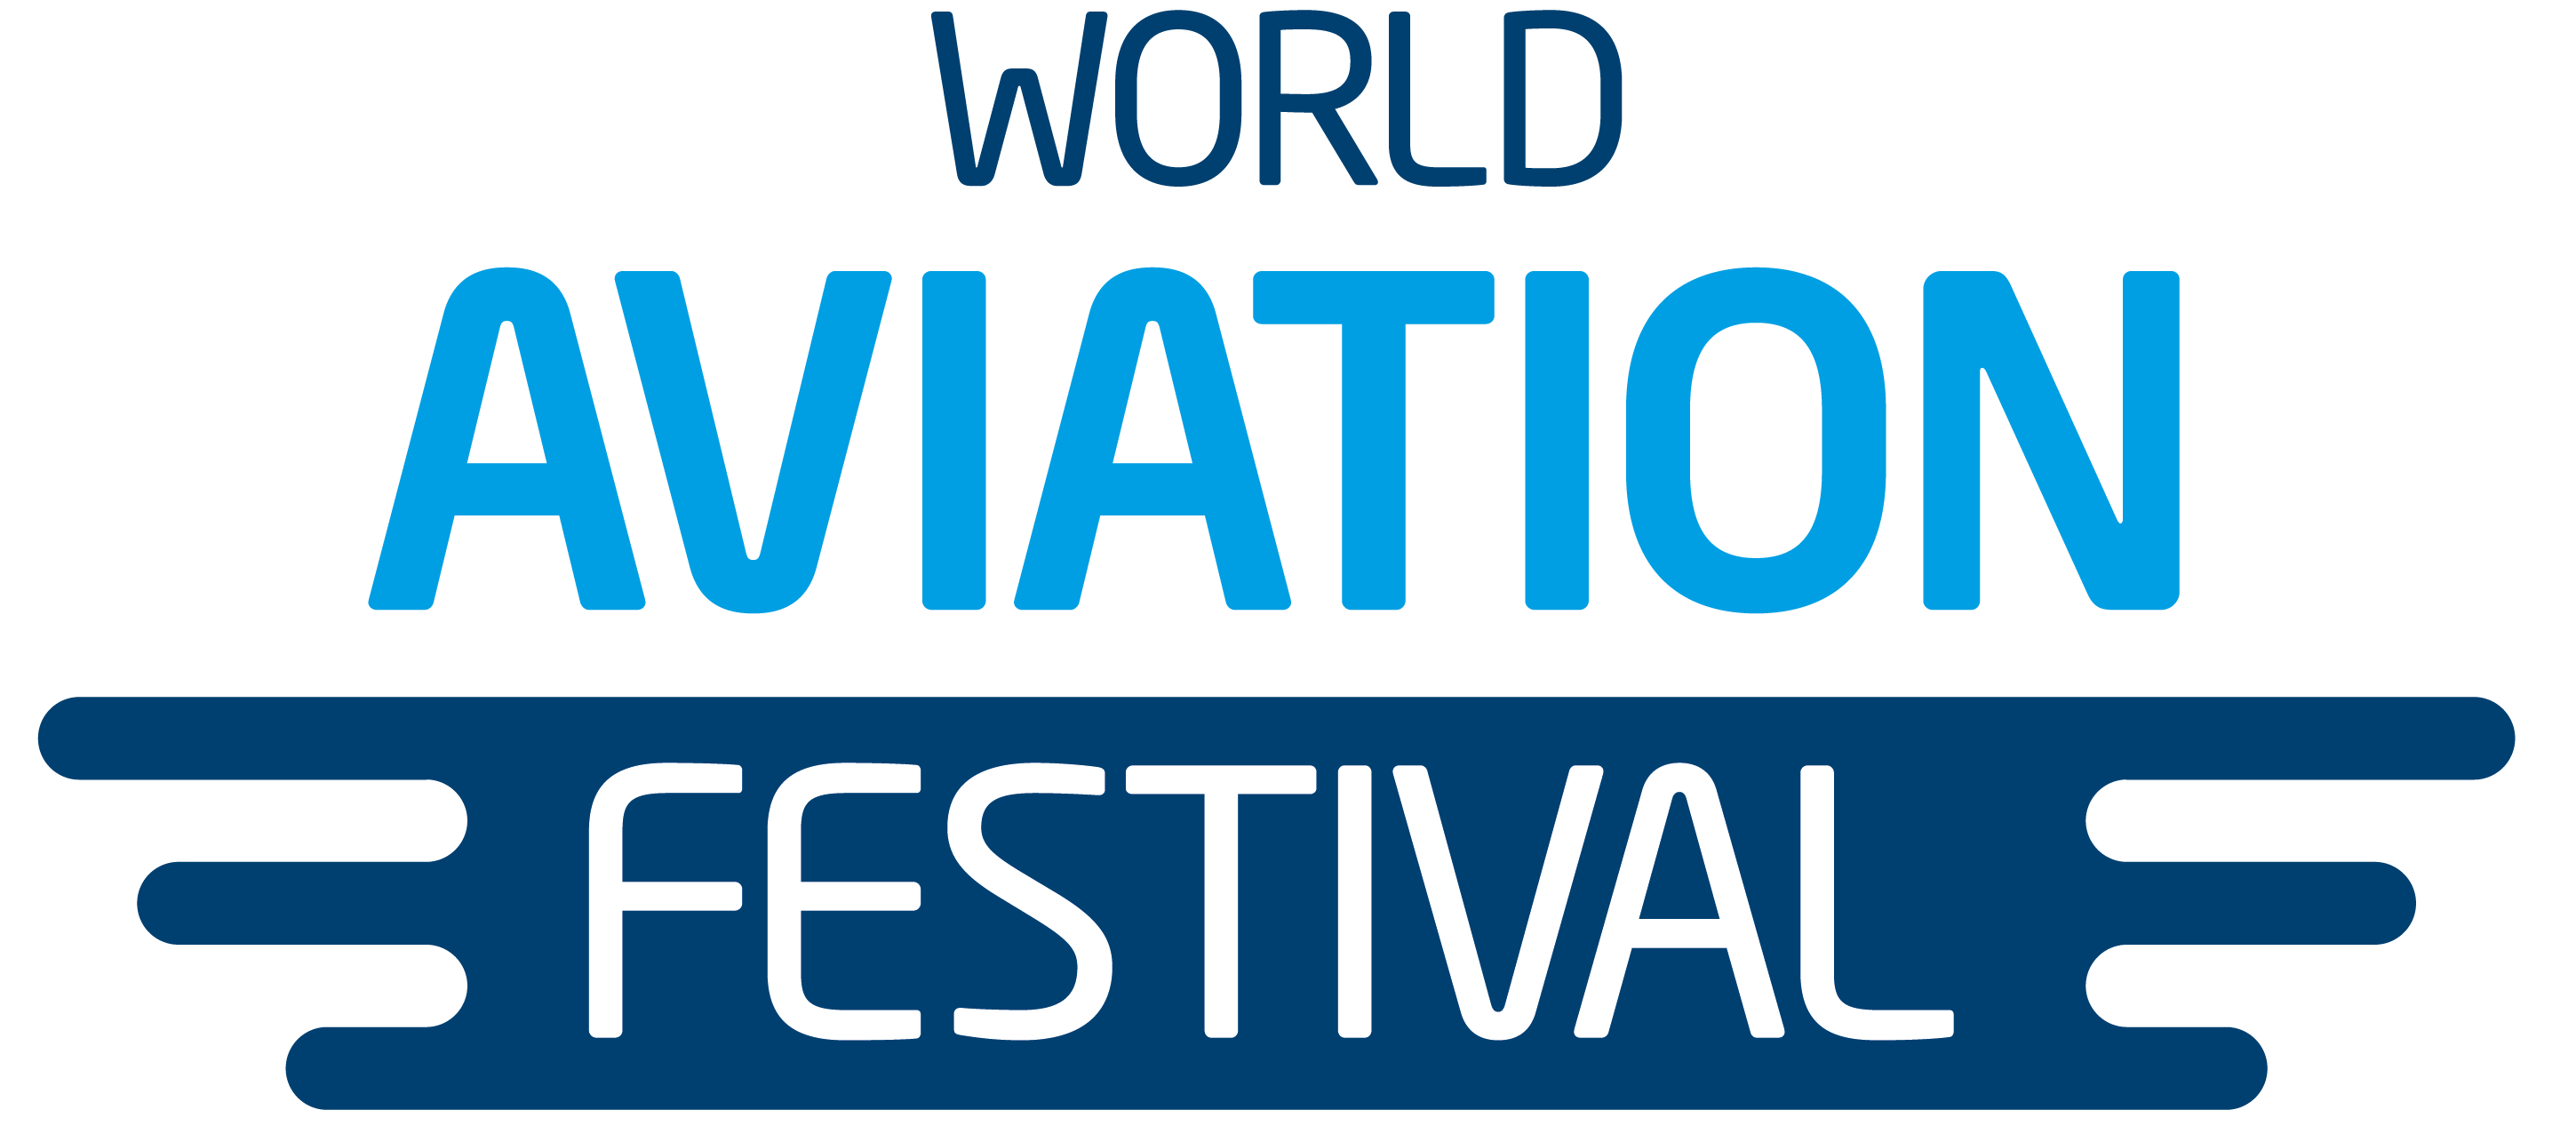 World Aviation Festival Logo